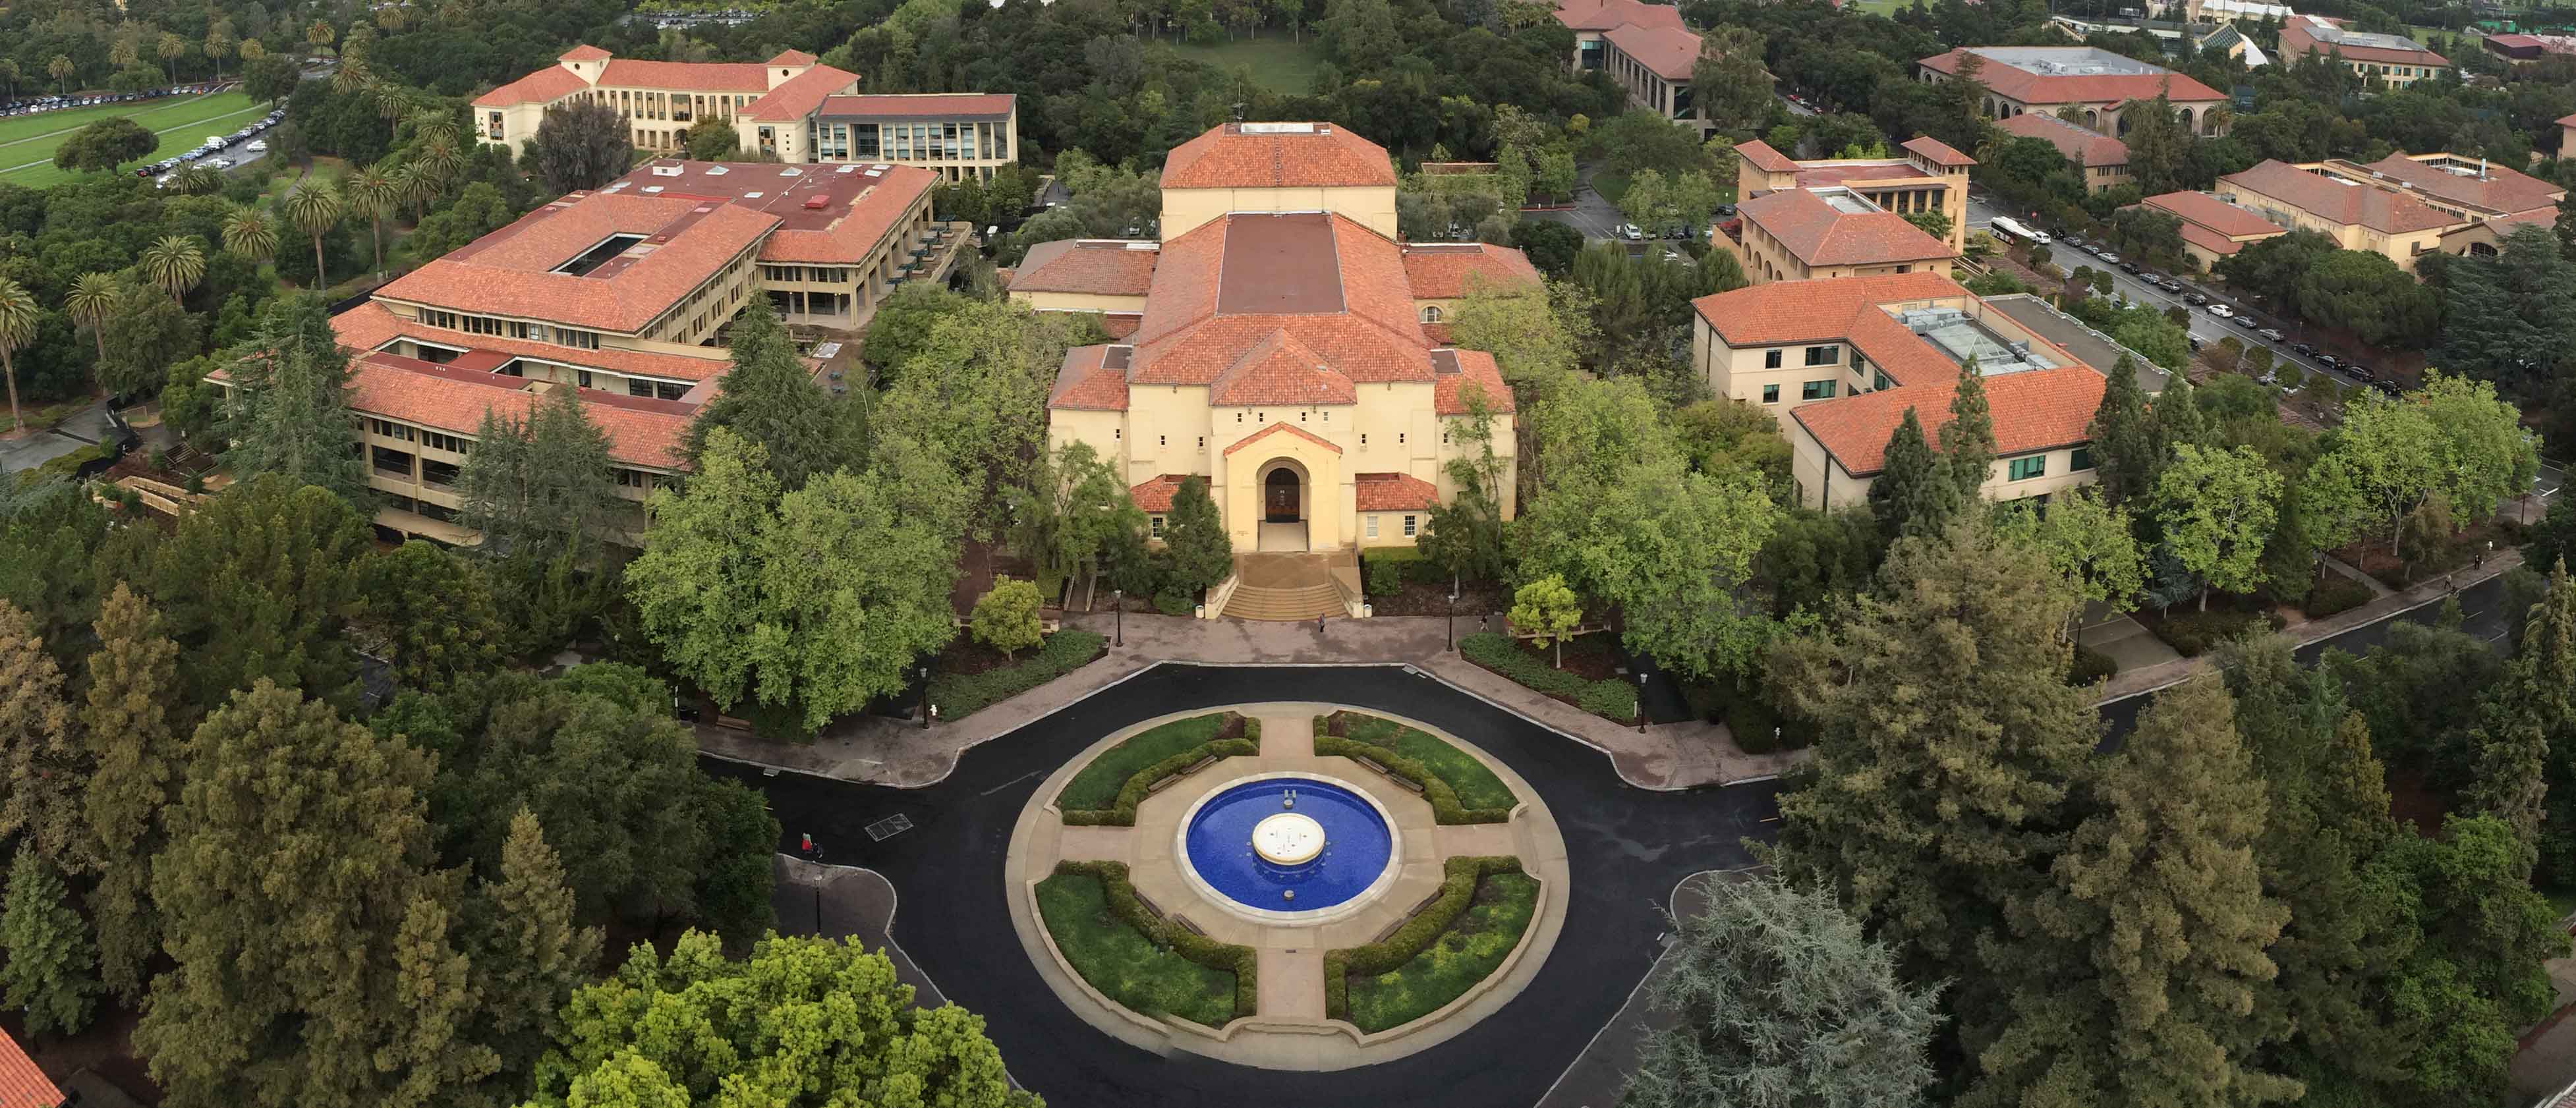 Stanford University - Stanford, CA